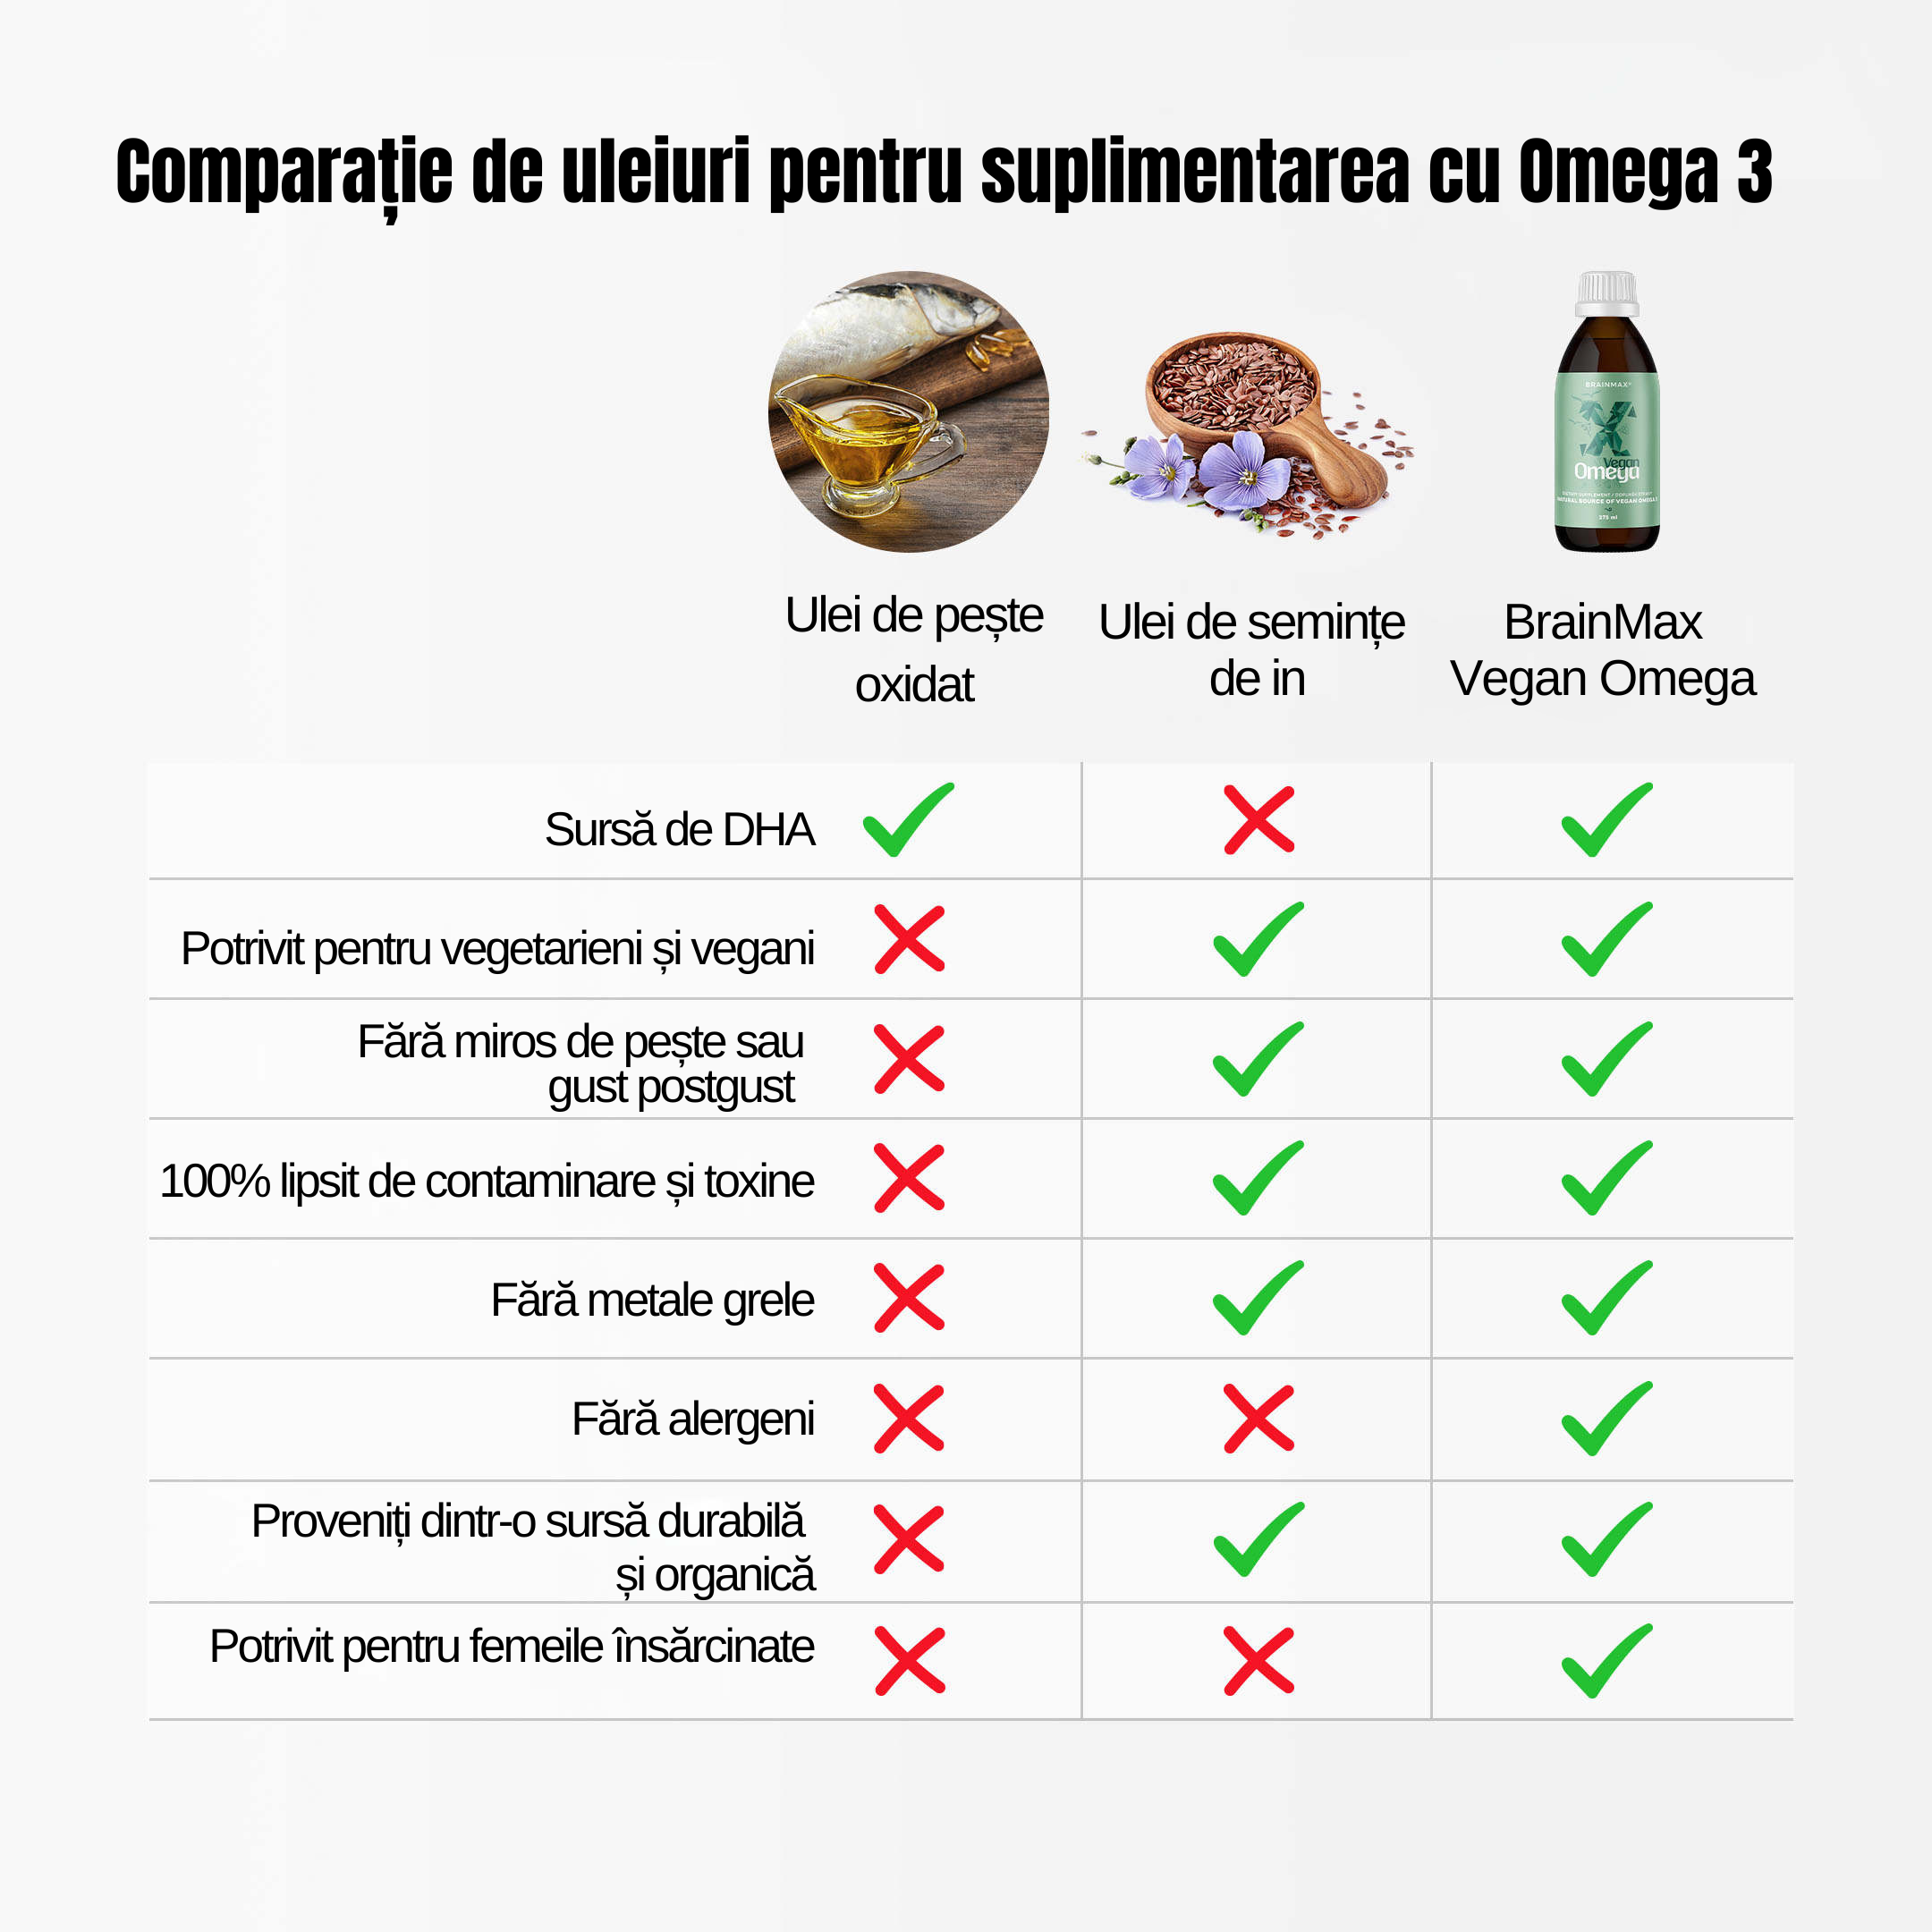 informații despre produs brainmax vegan omega